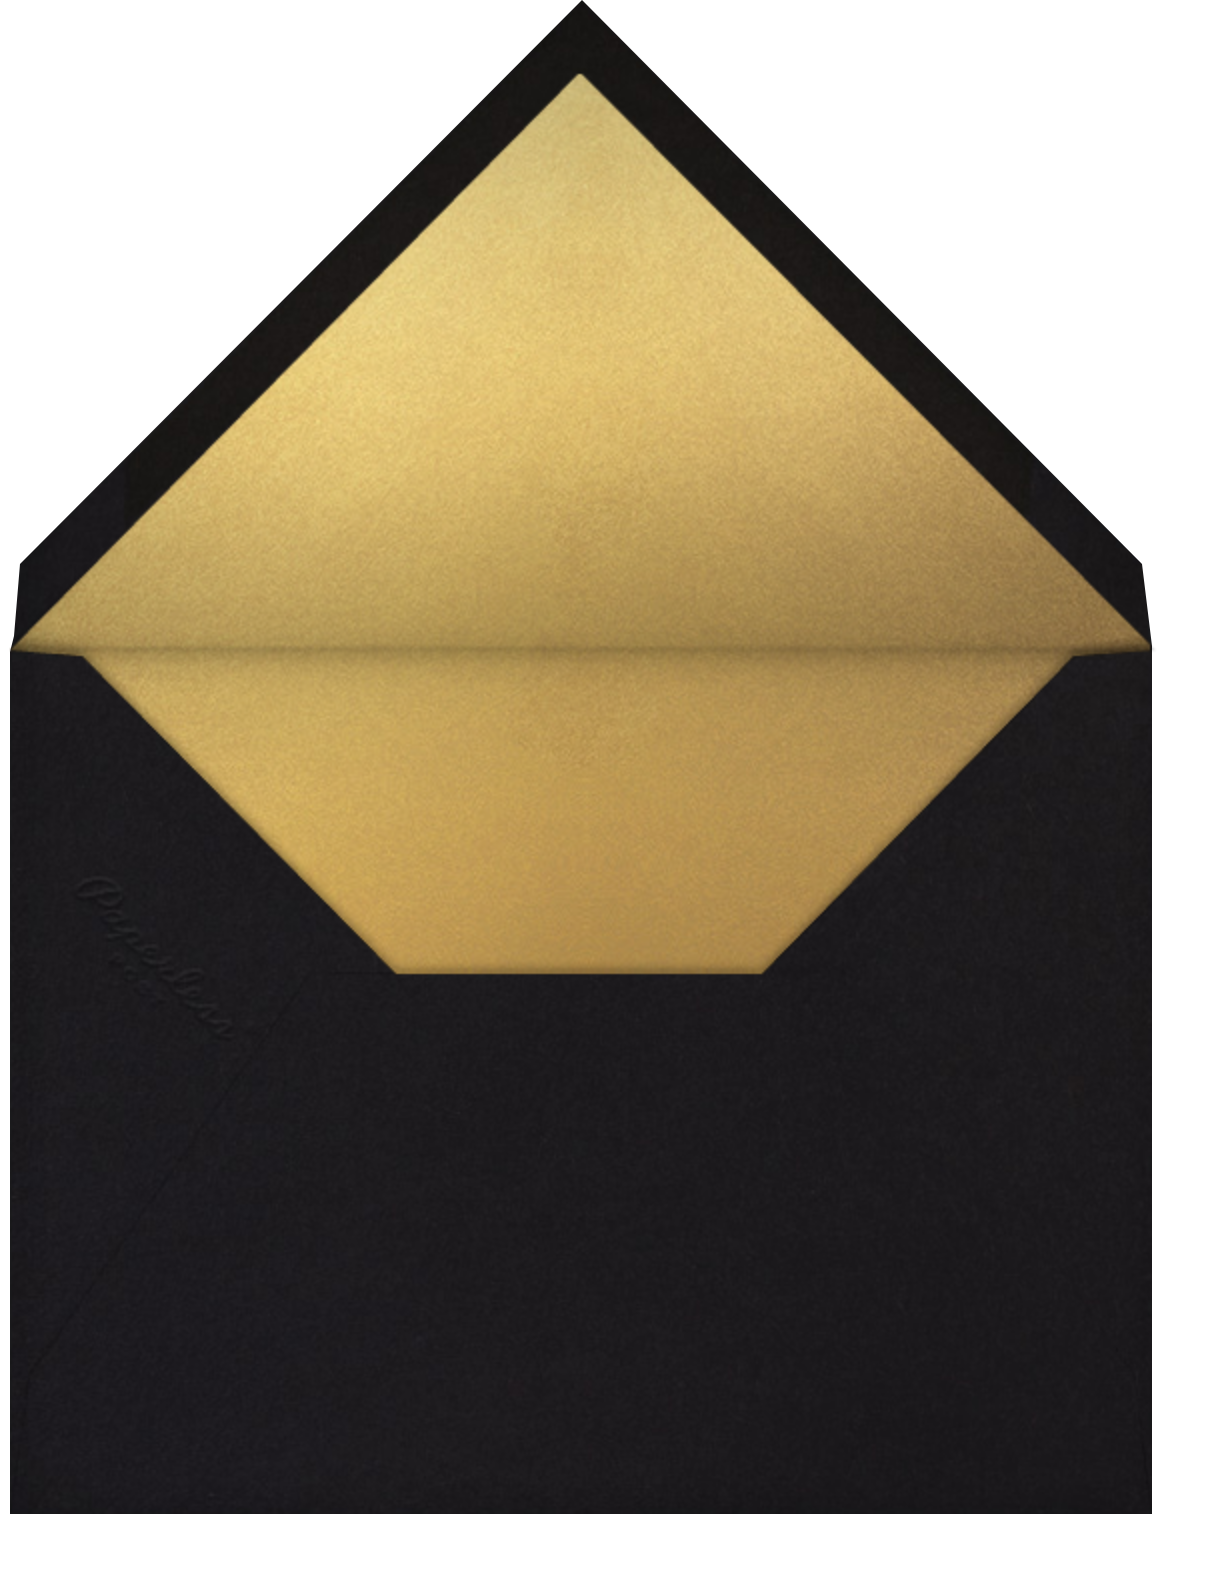 Cordial (Just Married) - Paperless Post - Envelope